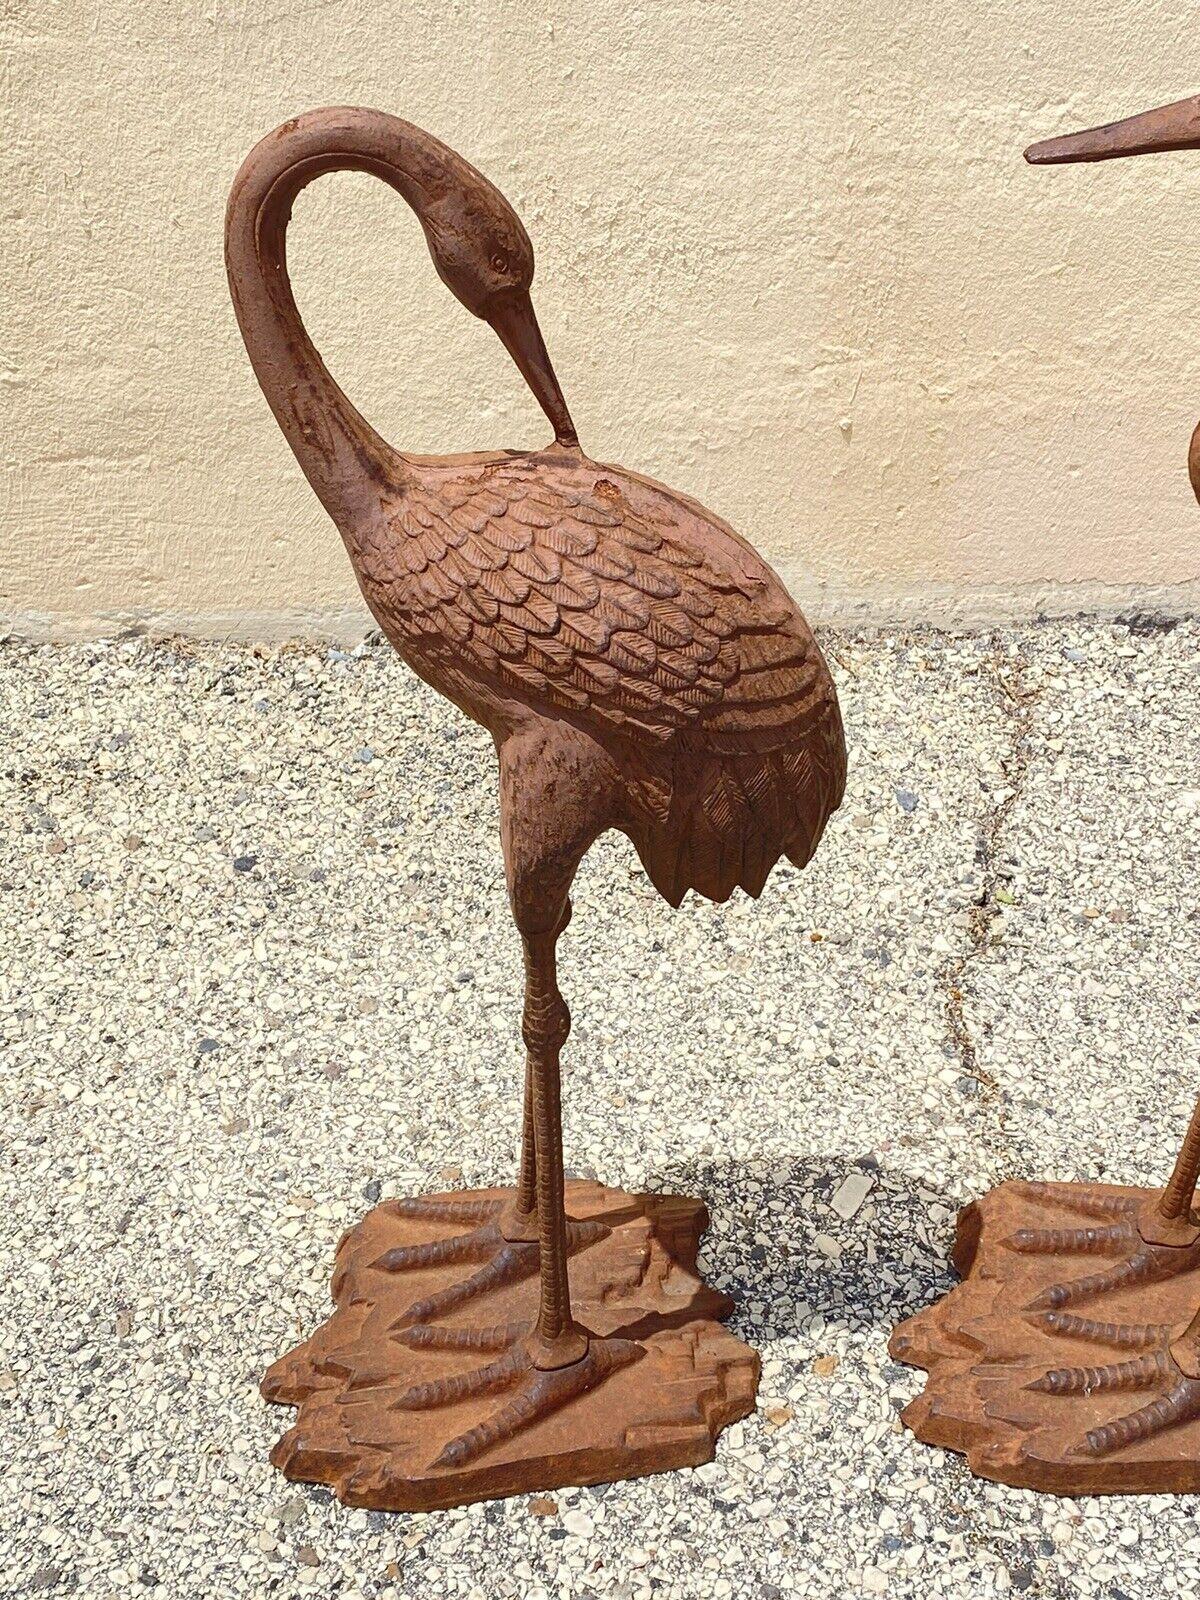 Decorative Outdoor Cast Iron Metal Garden Statue Sculpture Bird Crane - Set of 2. Circa Late 20th - Early 21st Century. Measurements: 30